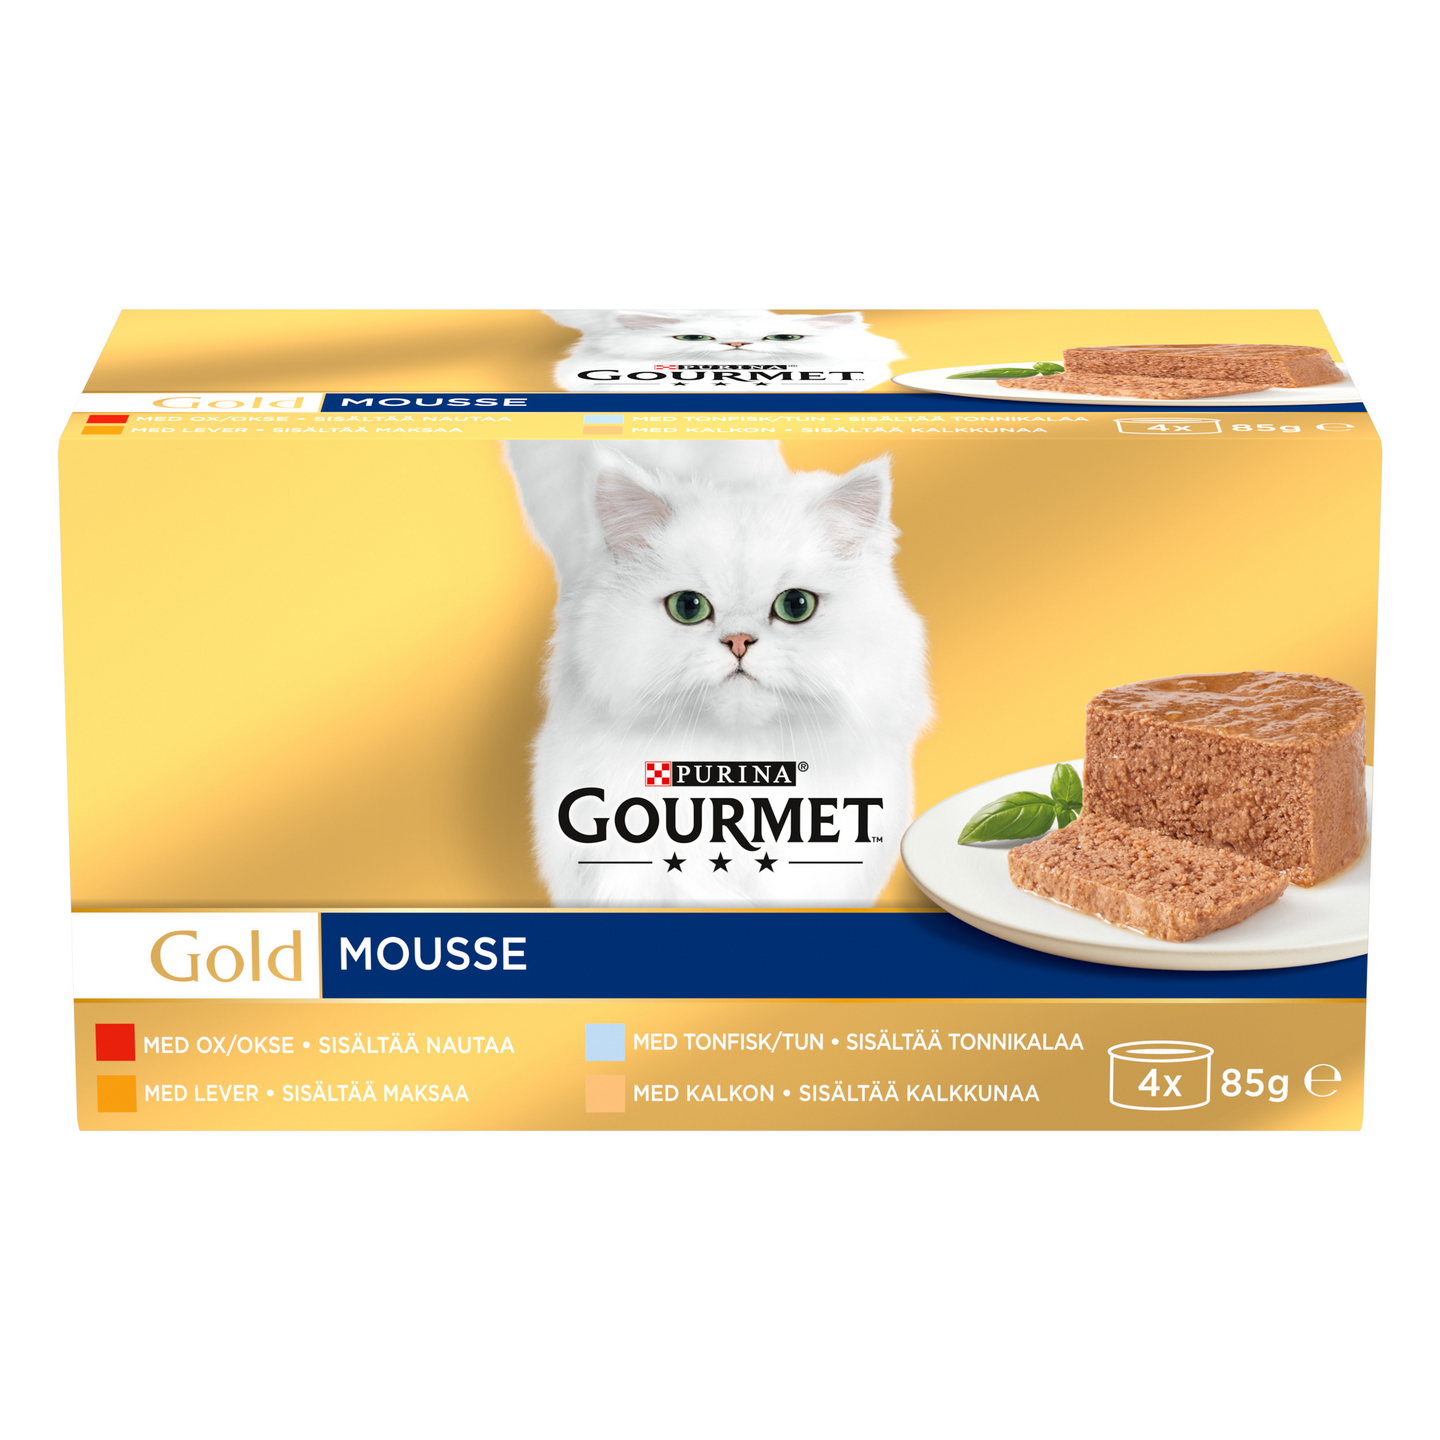 Gourmet Gold Mousse-lajitelma 4x85g kissanruoka